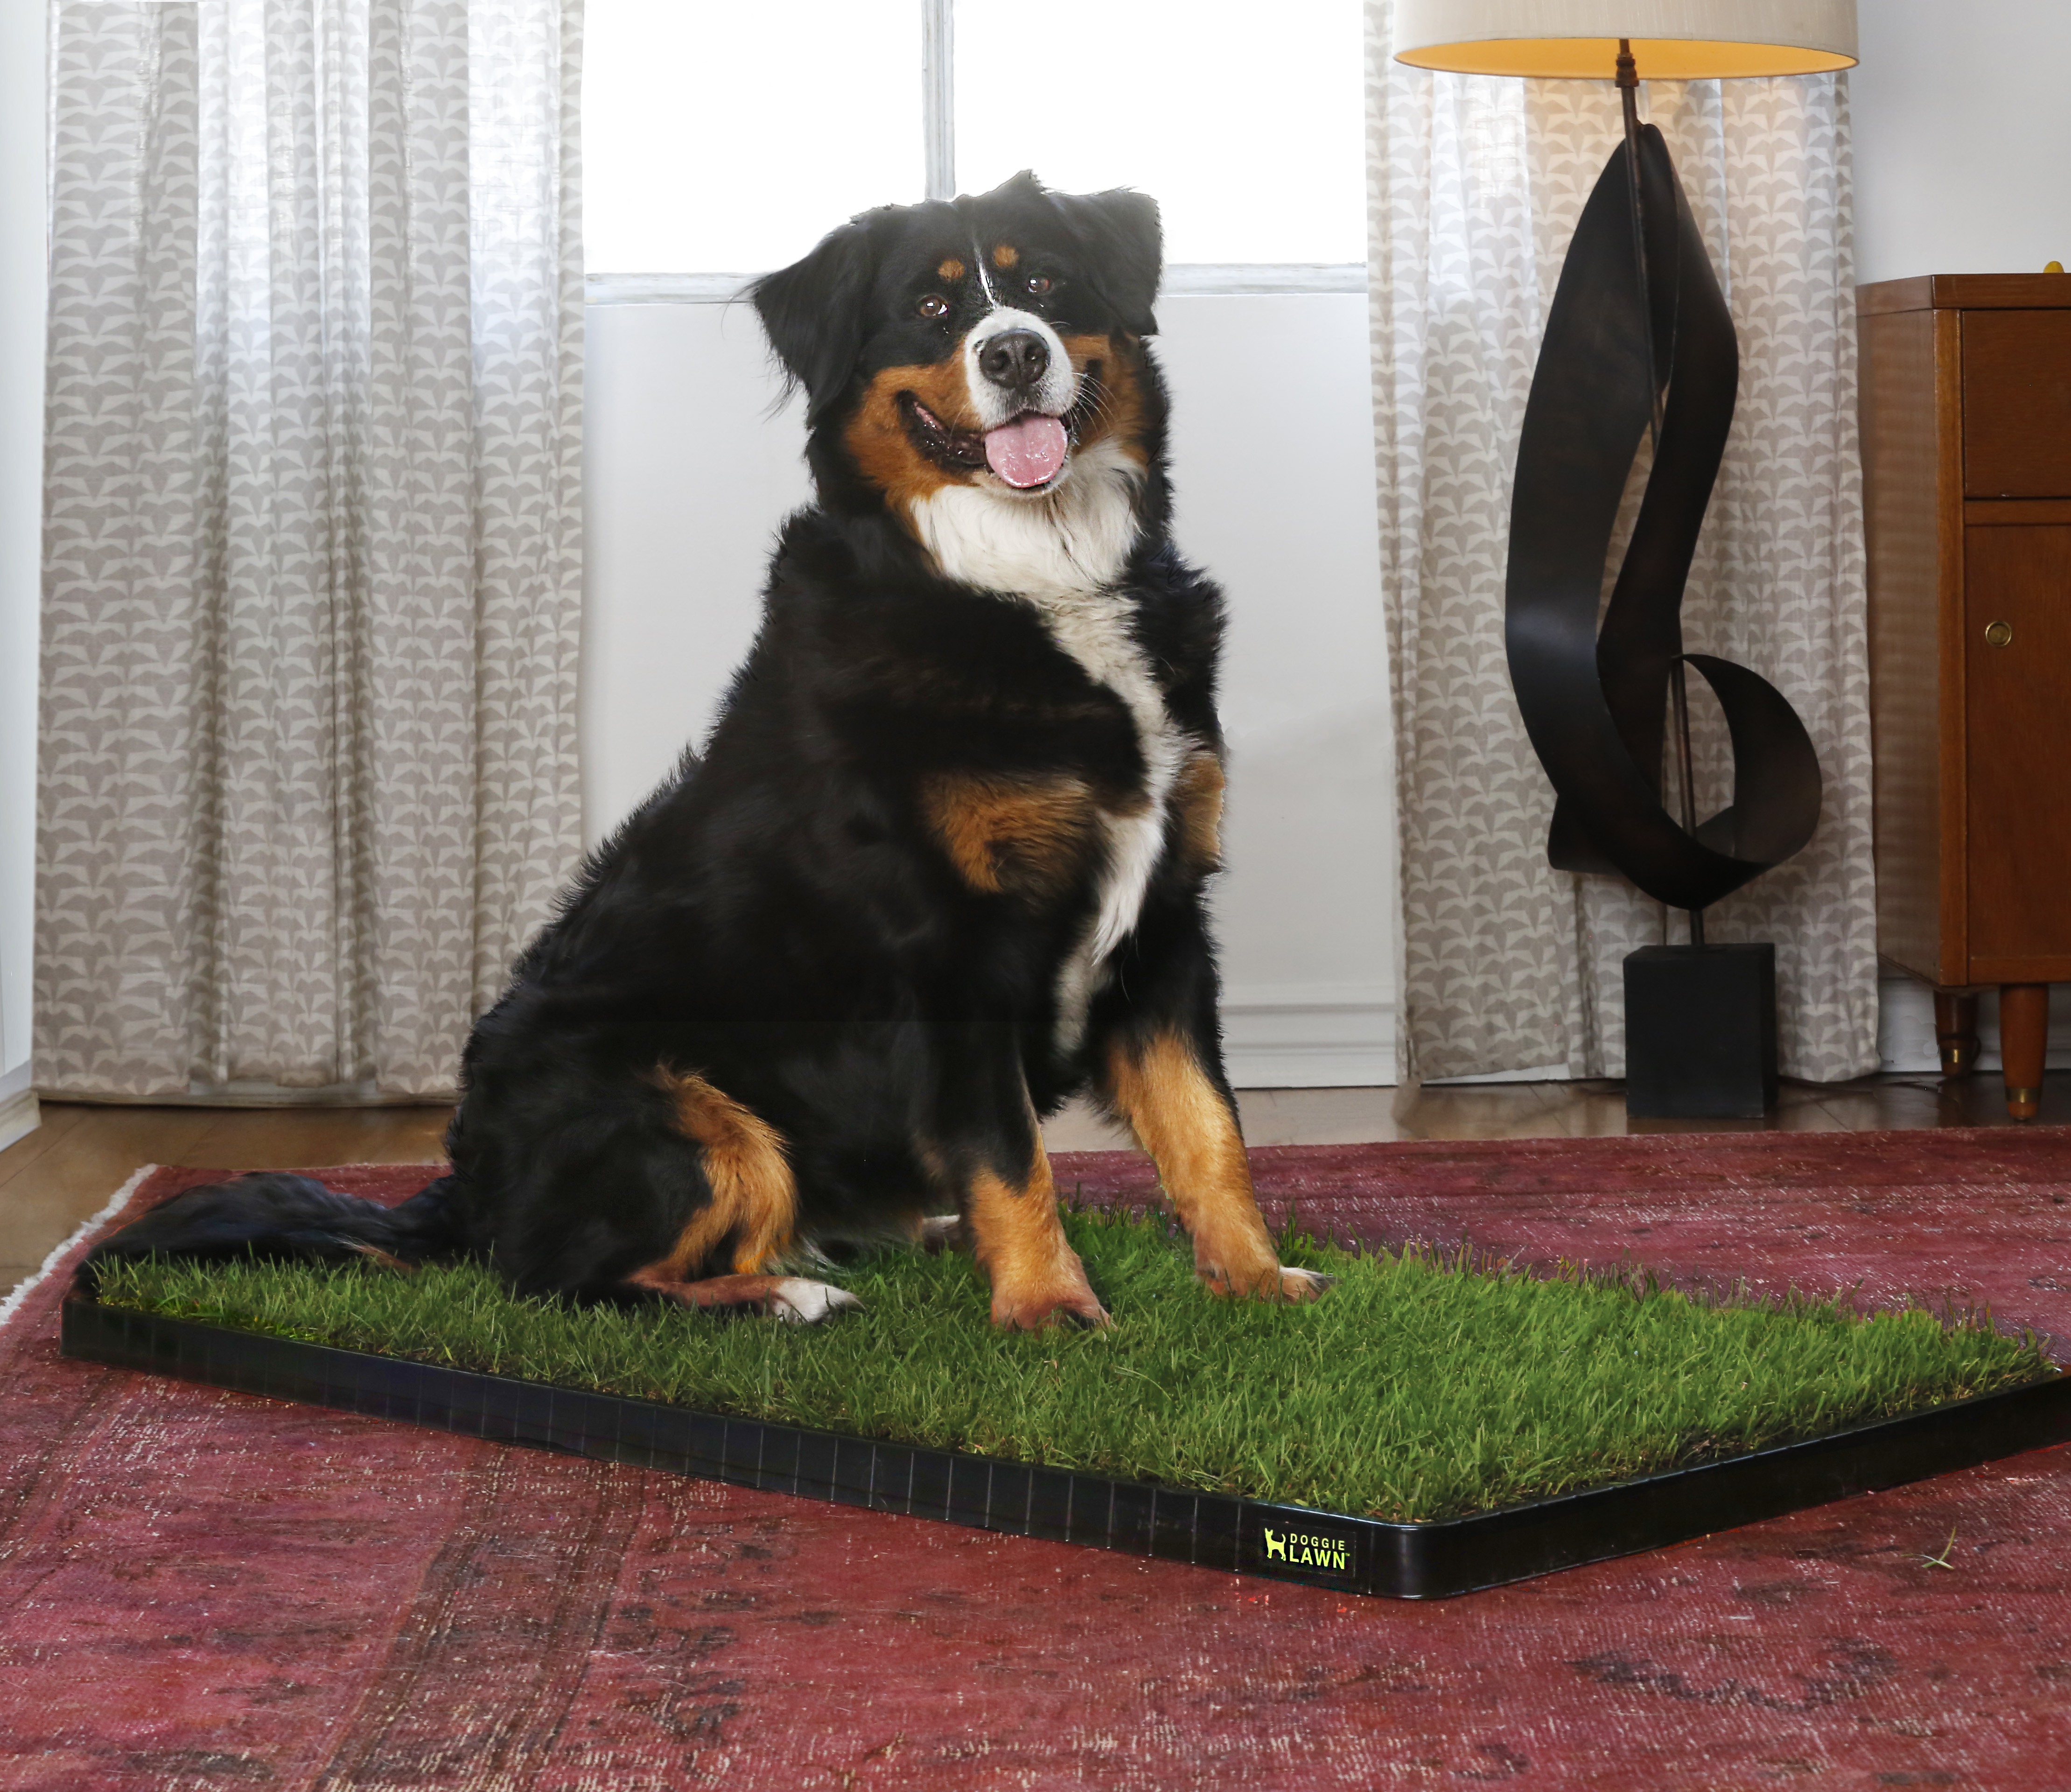 Big dog sitting on doggie lawn indoor grass pad